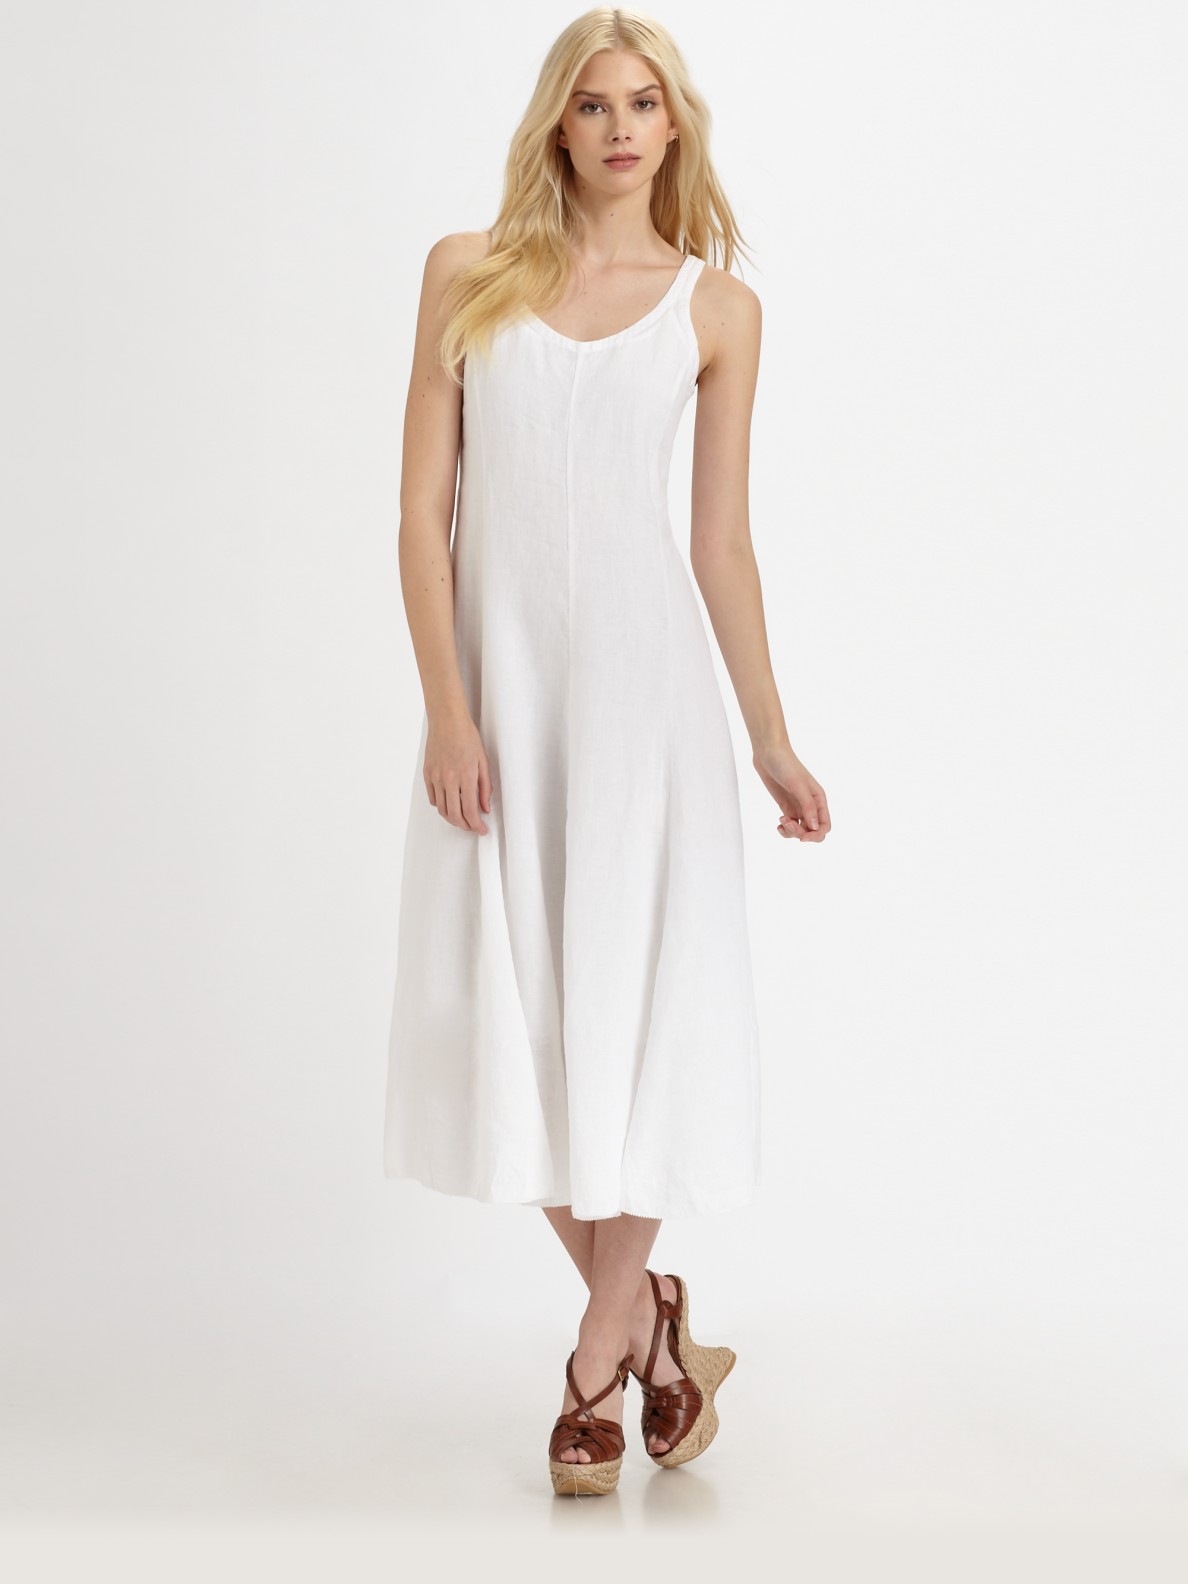 Eileen Fisher Handkerchief Linen Dress in White | Lyst